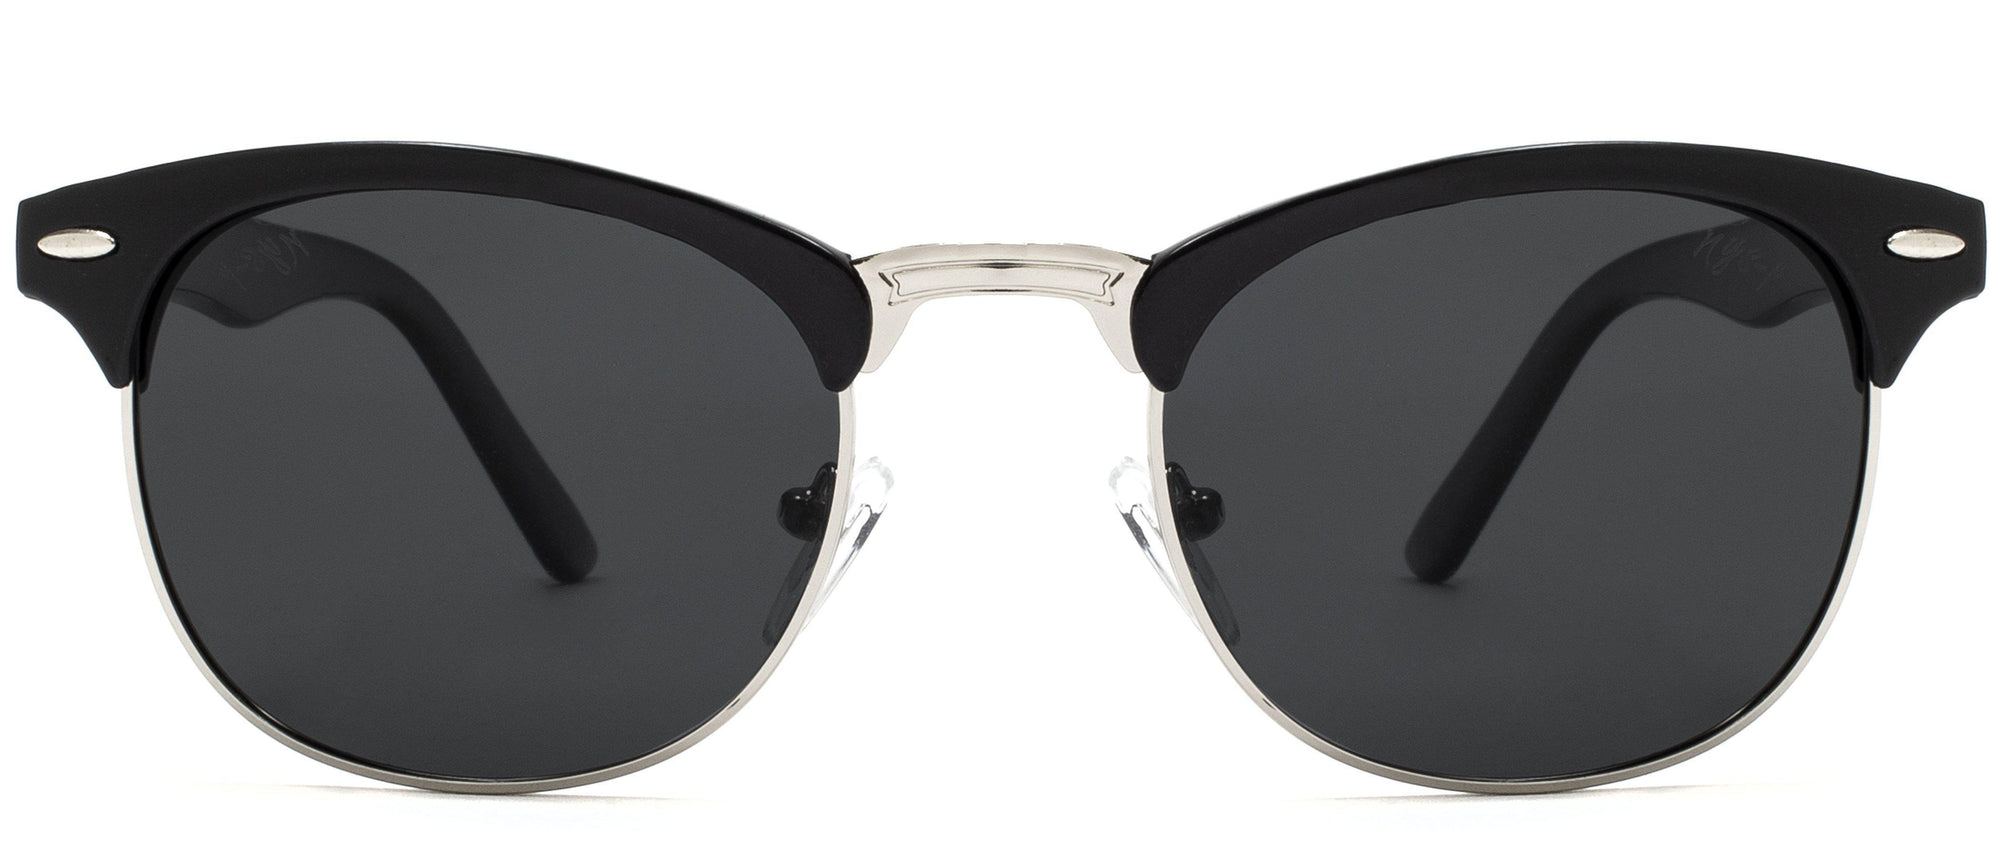 Park Row - Sunglasses NYS Collection Eyewear